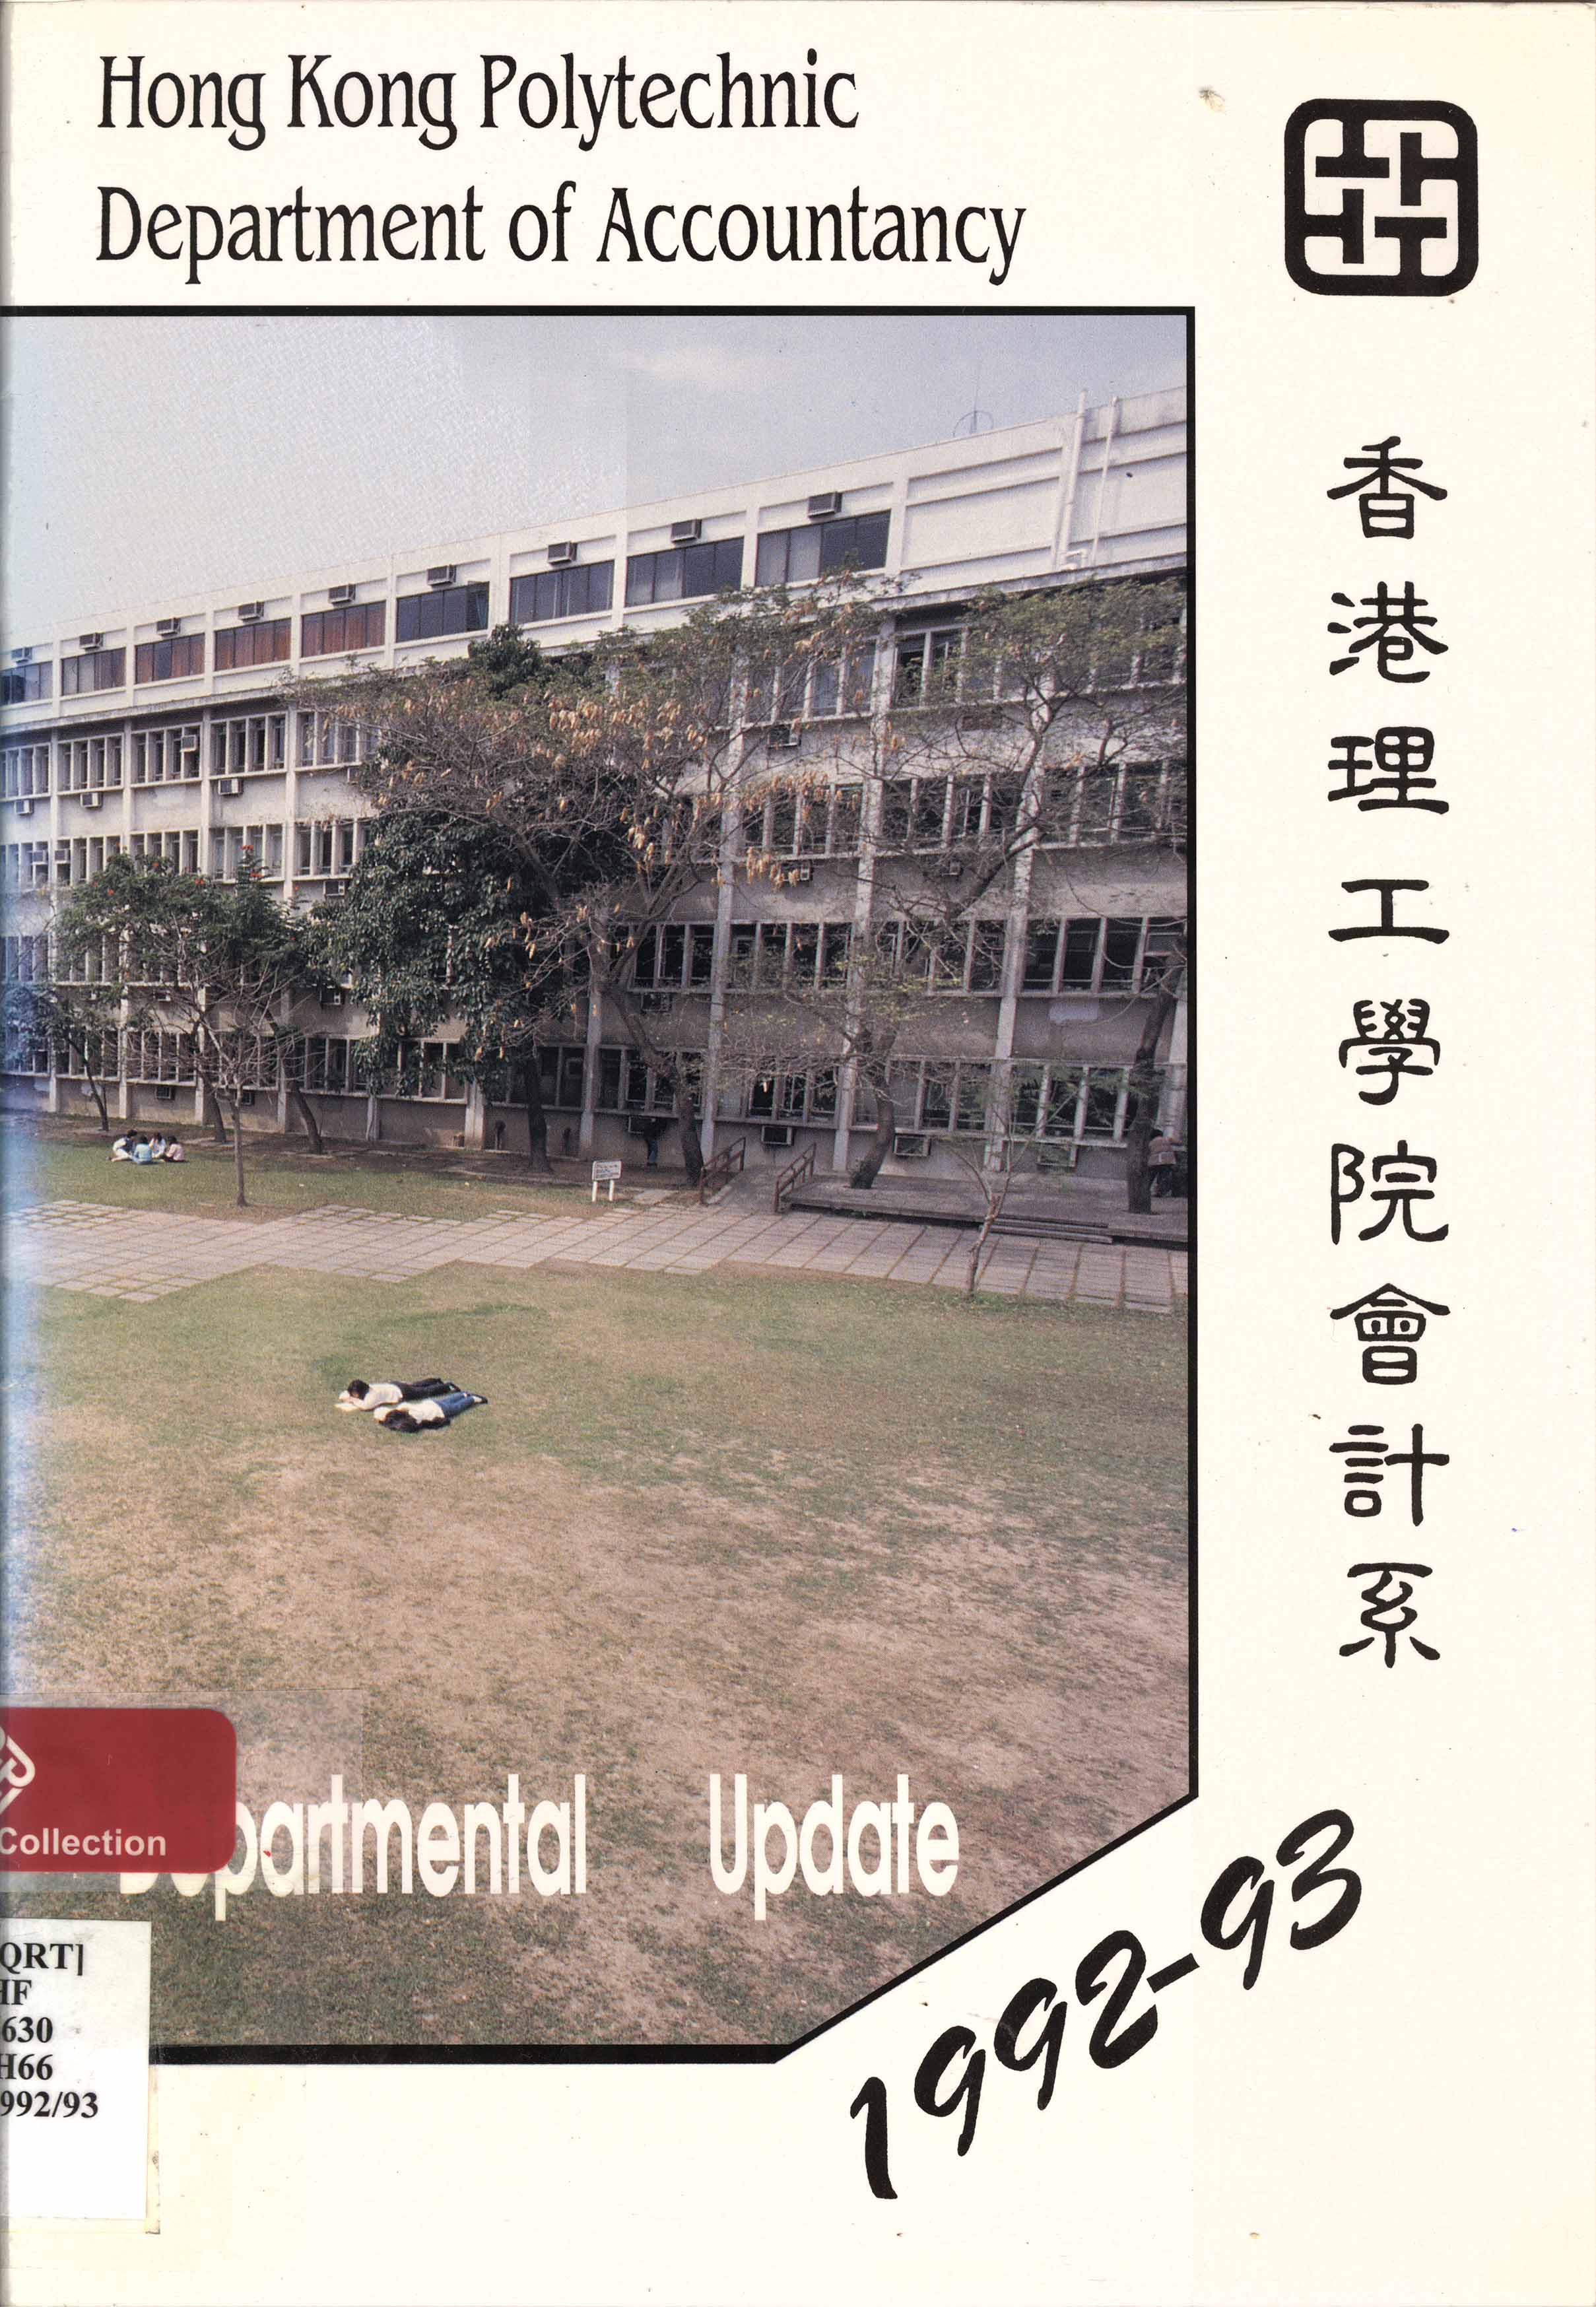 Hong Kong Polytechnic. Department of Accountancy. Departmental update 1992/93